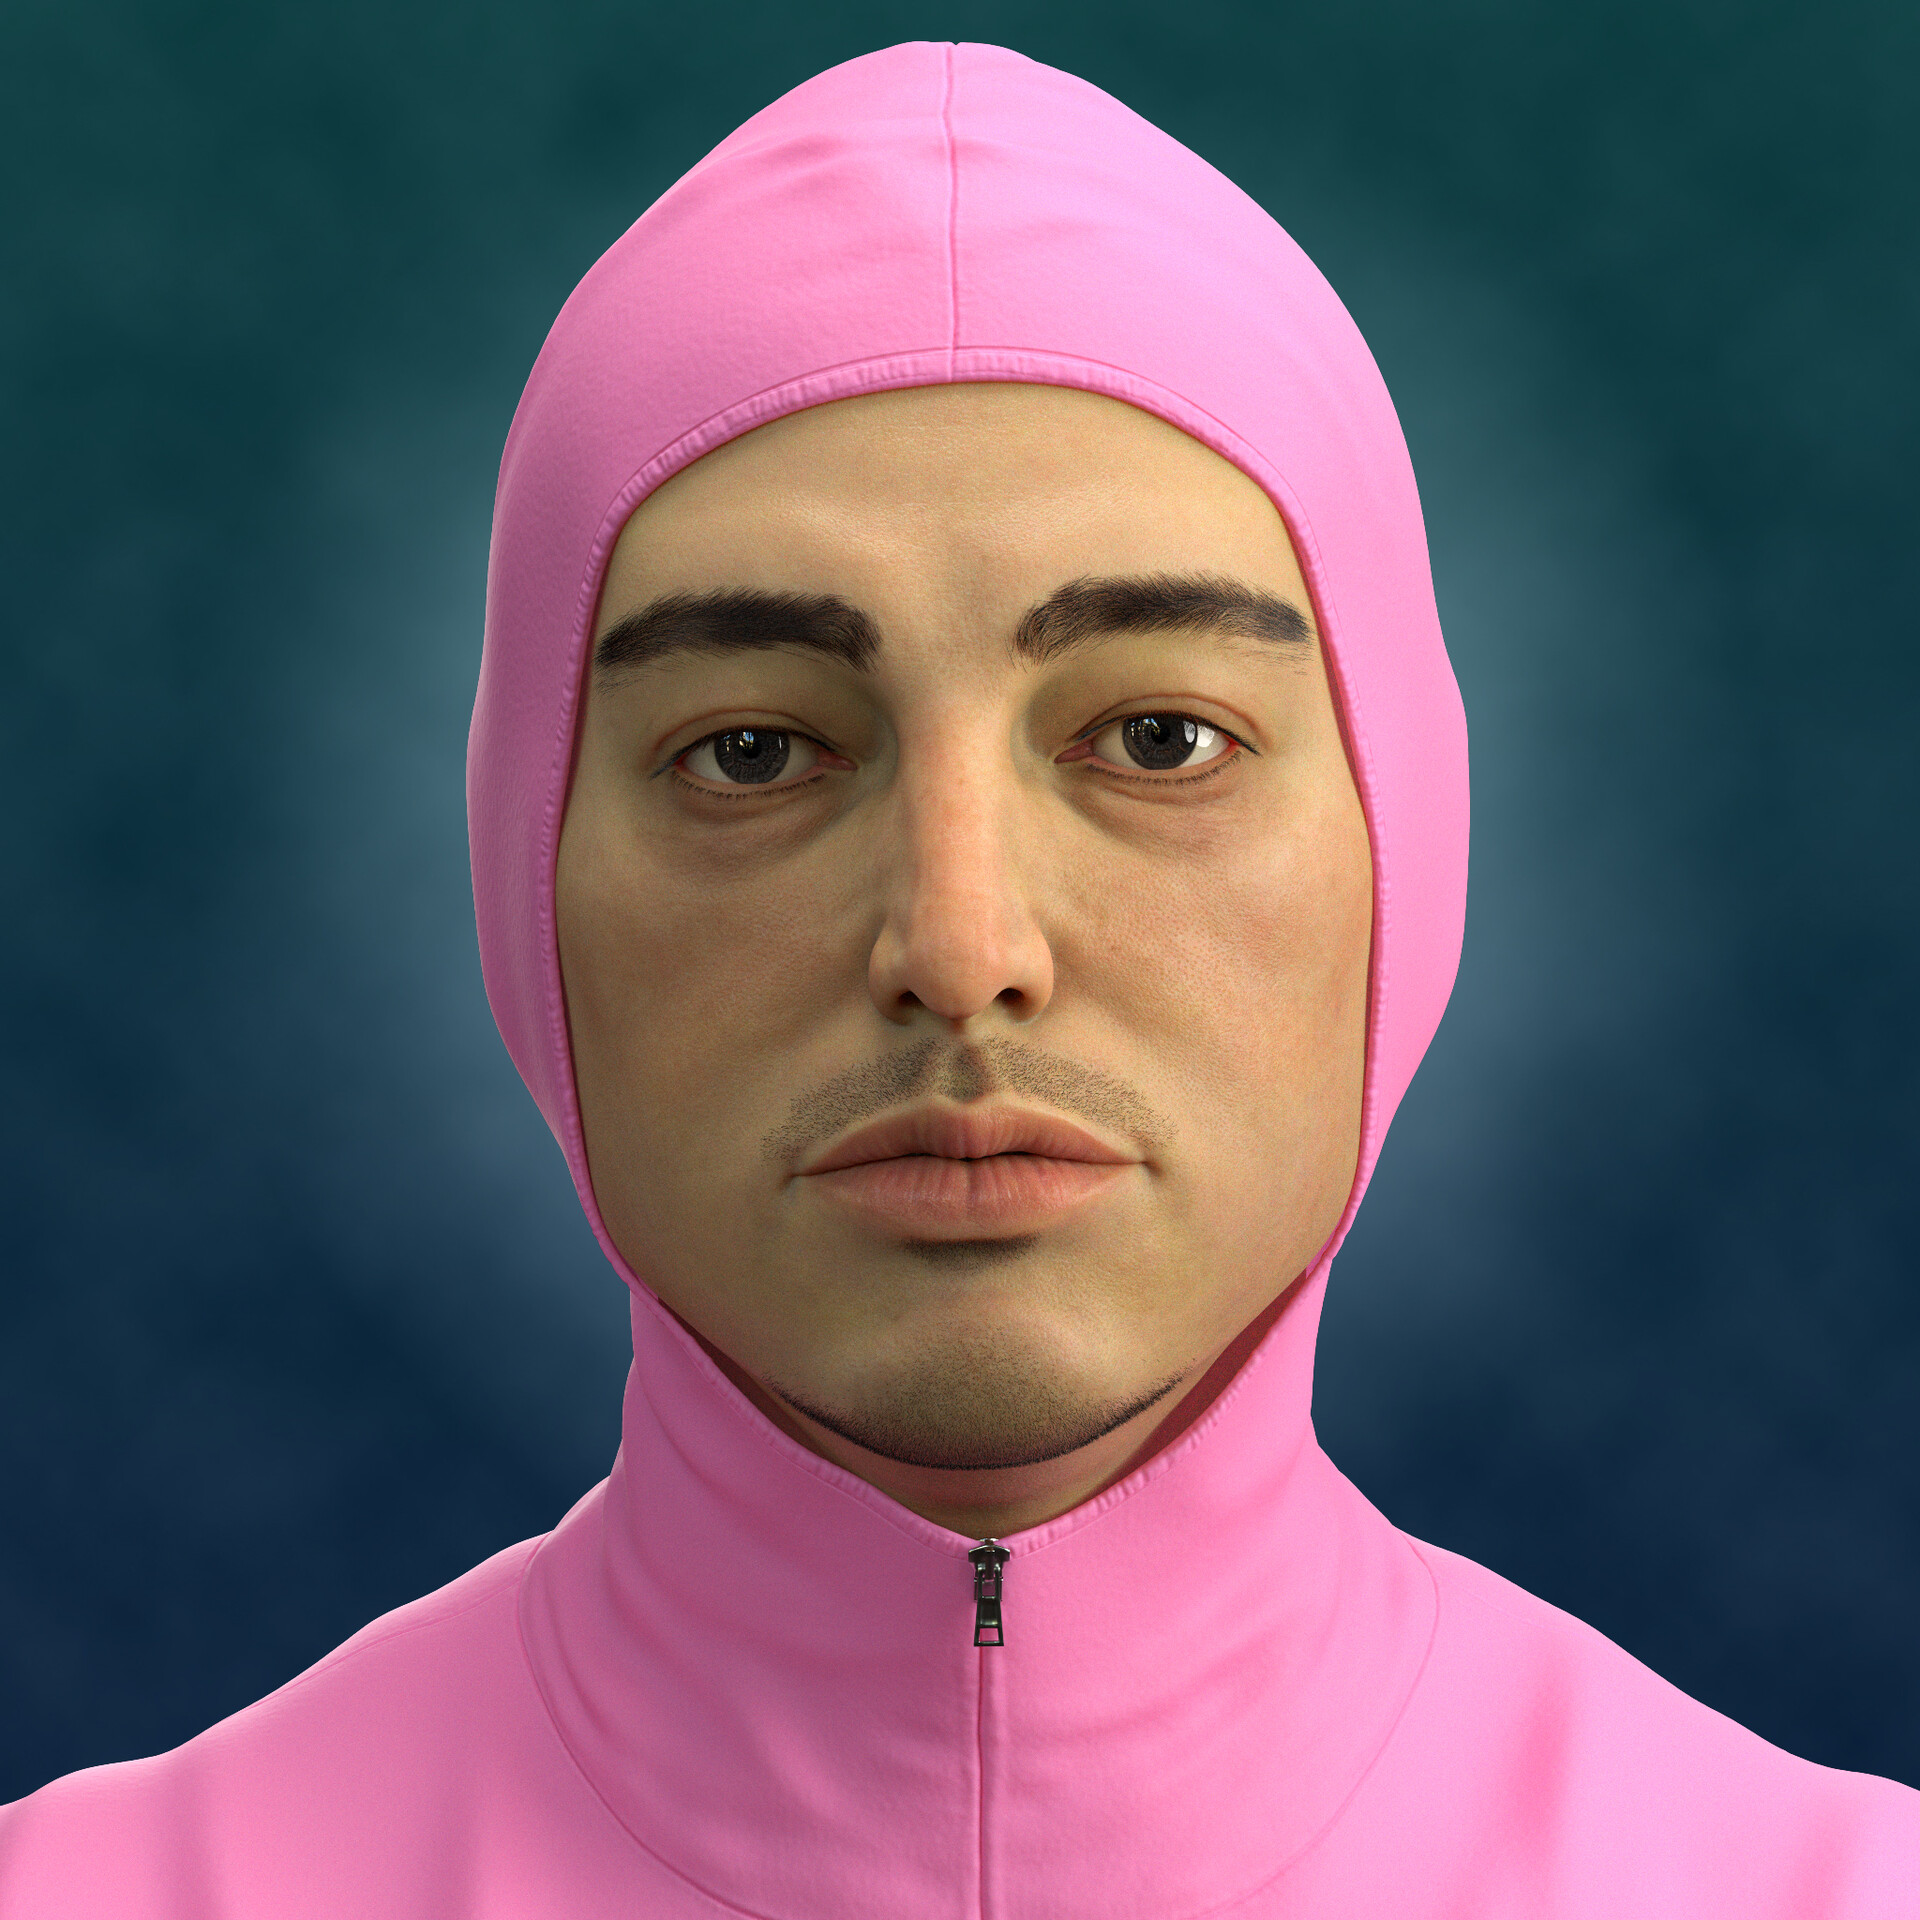 artstation-pink-guy